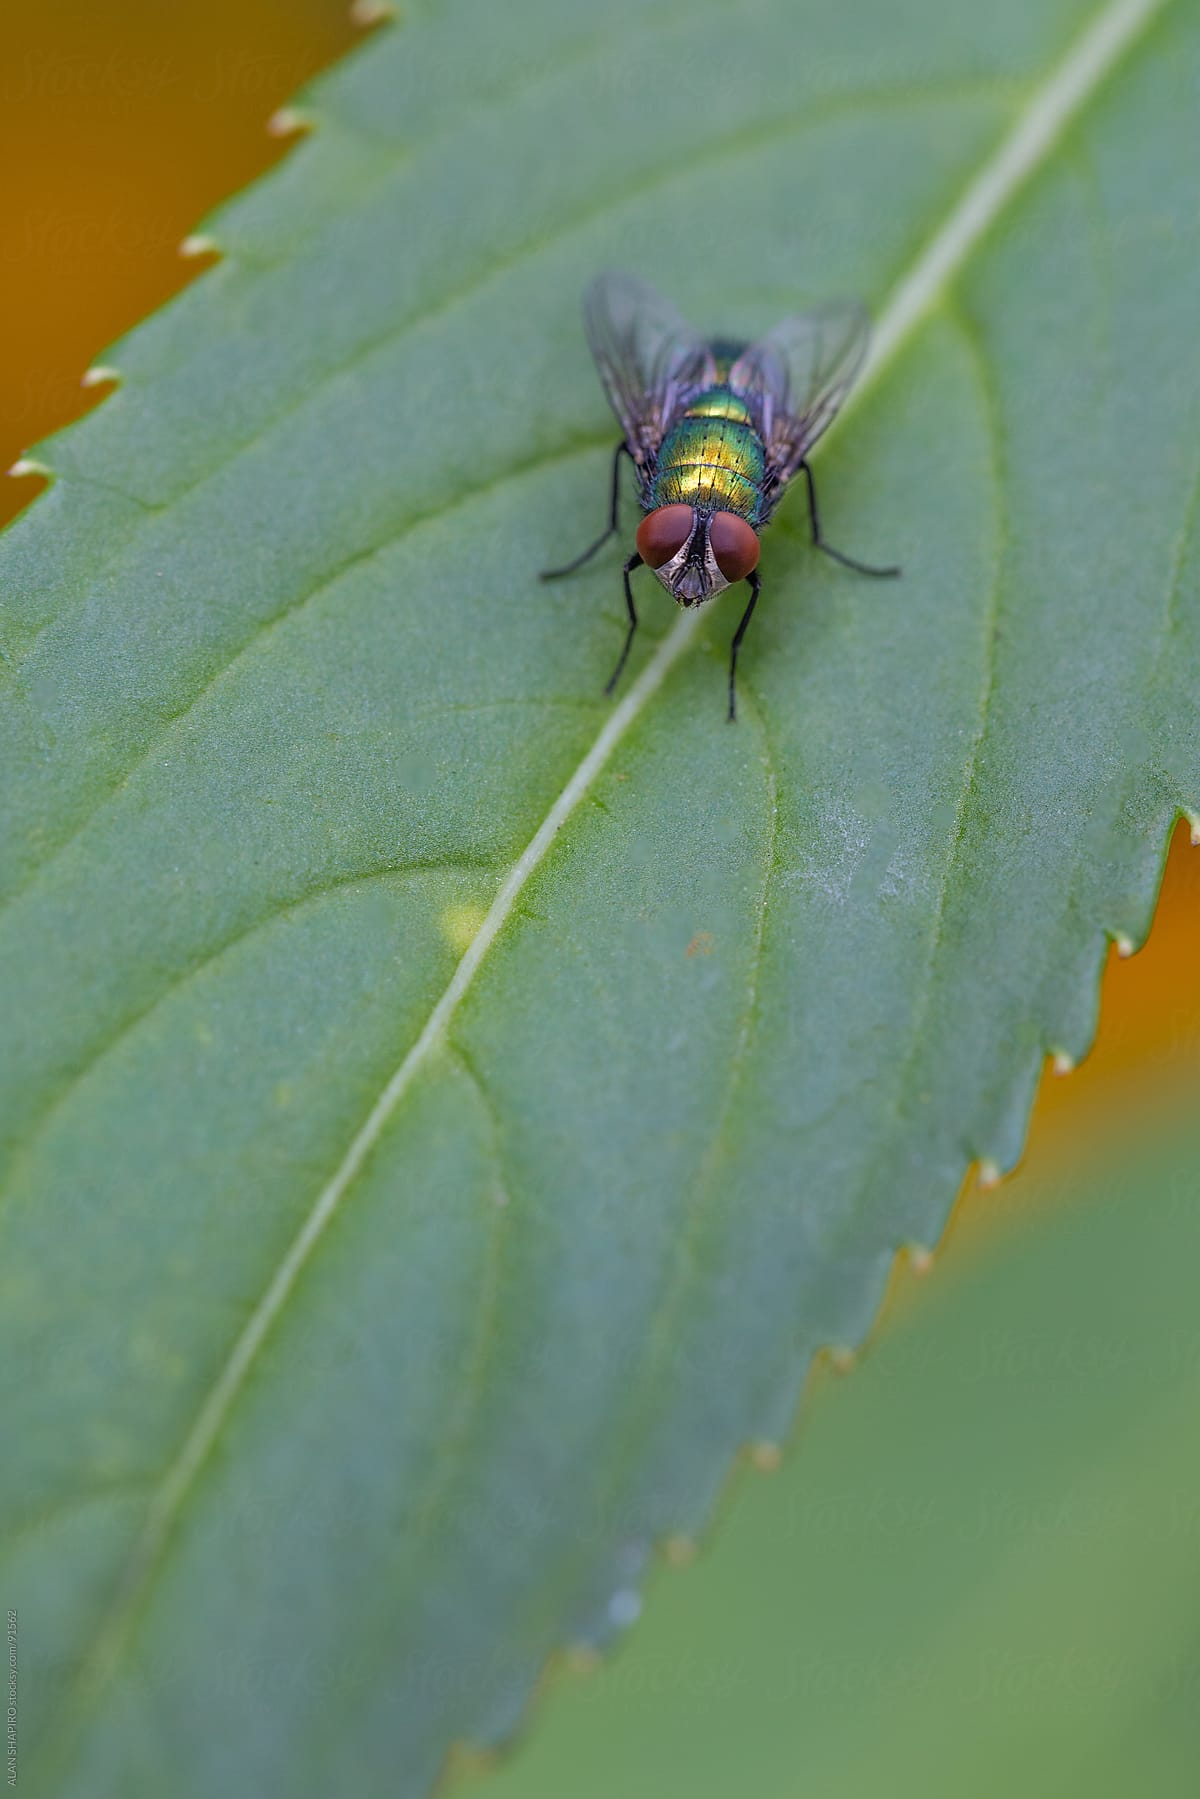 A fly on a leaf